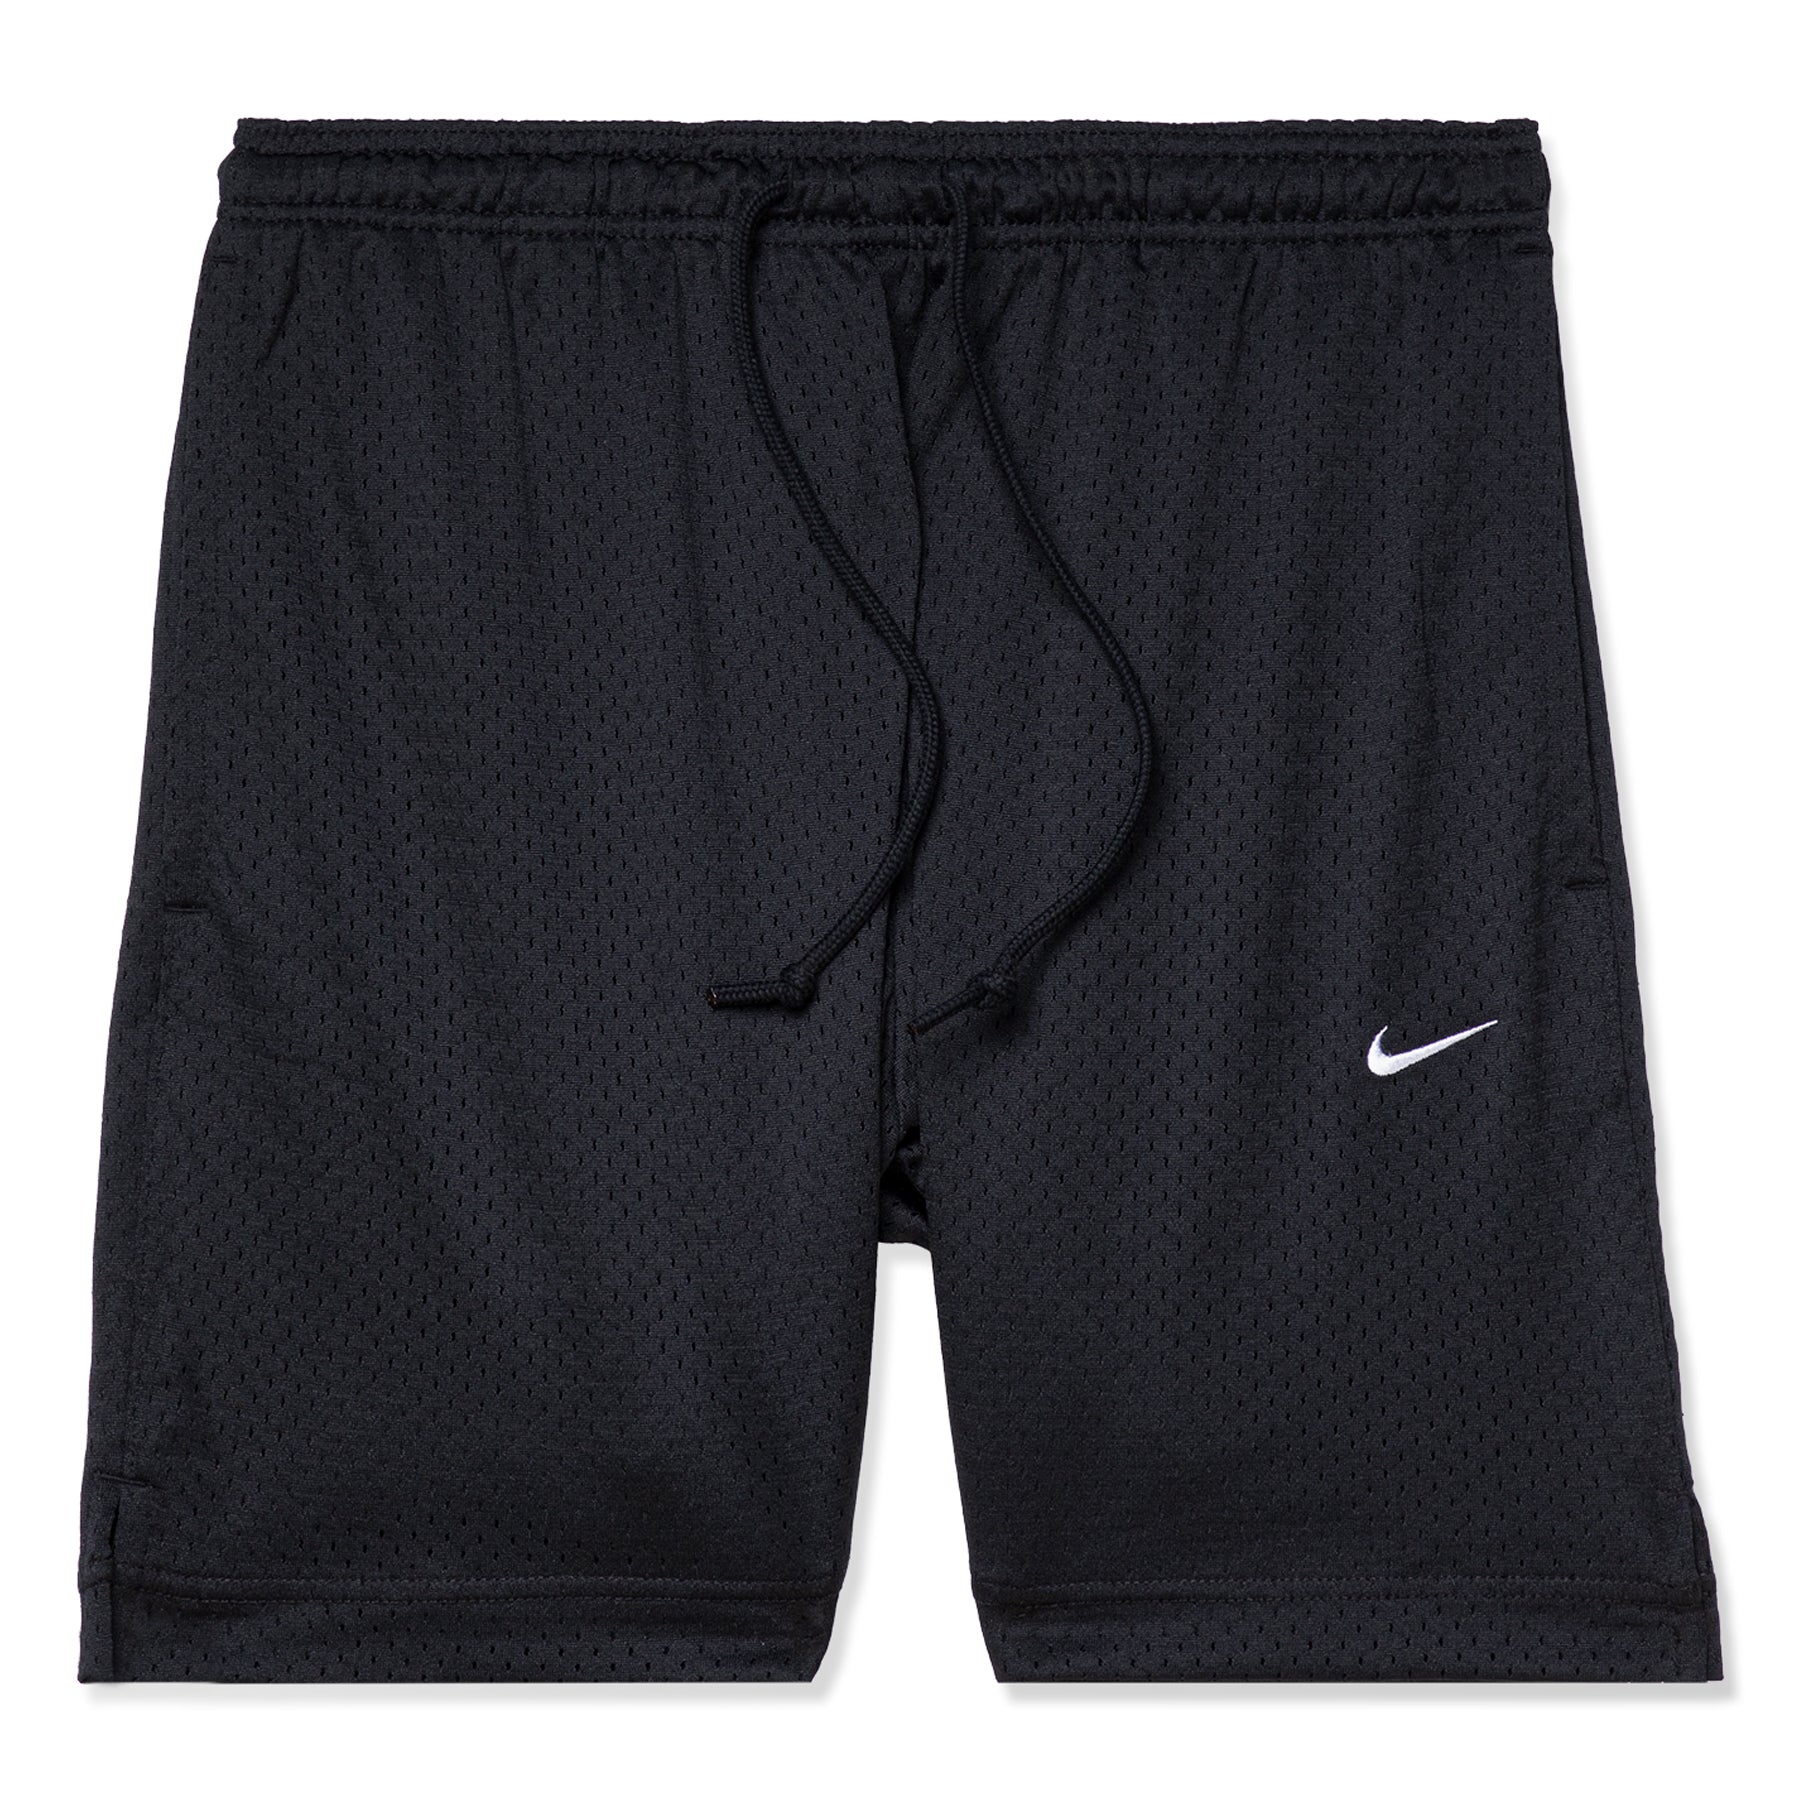 Sportswear Essentials – Nike Sport Concepts (Black/White)